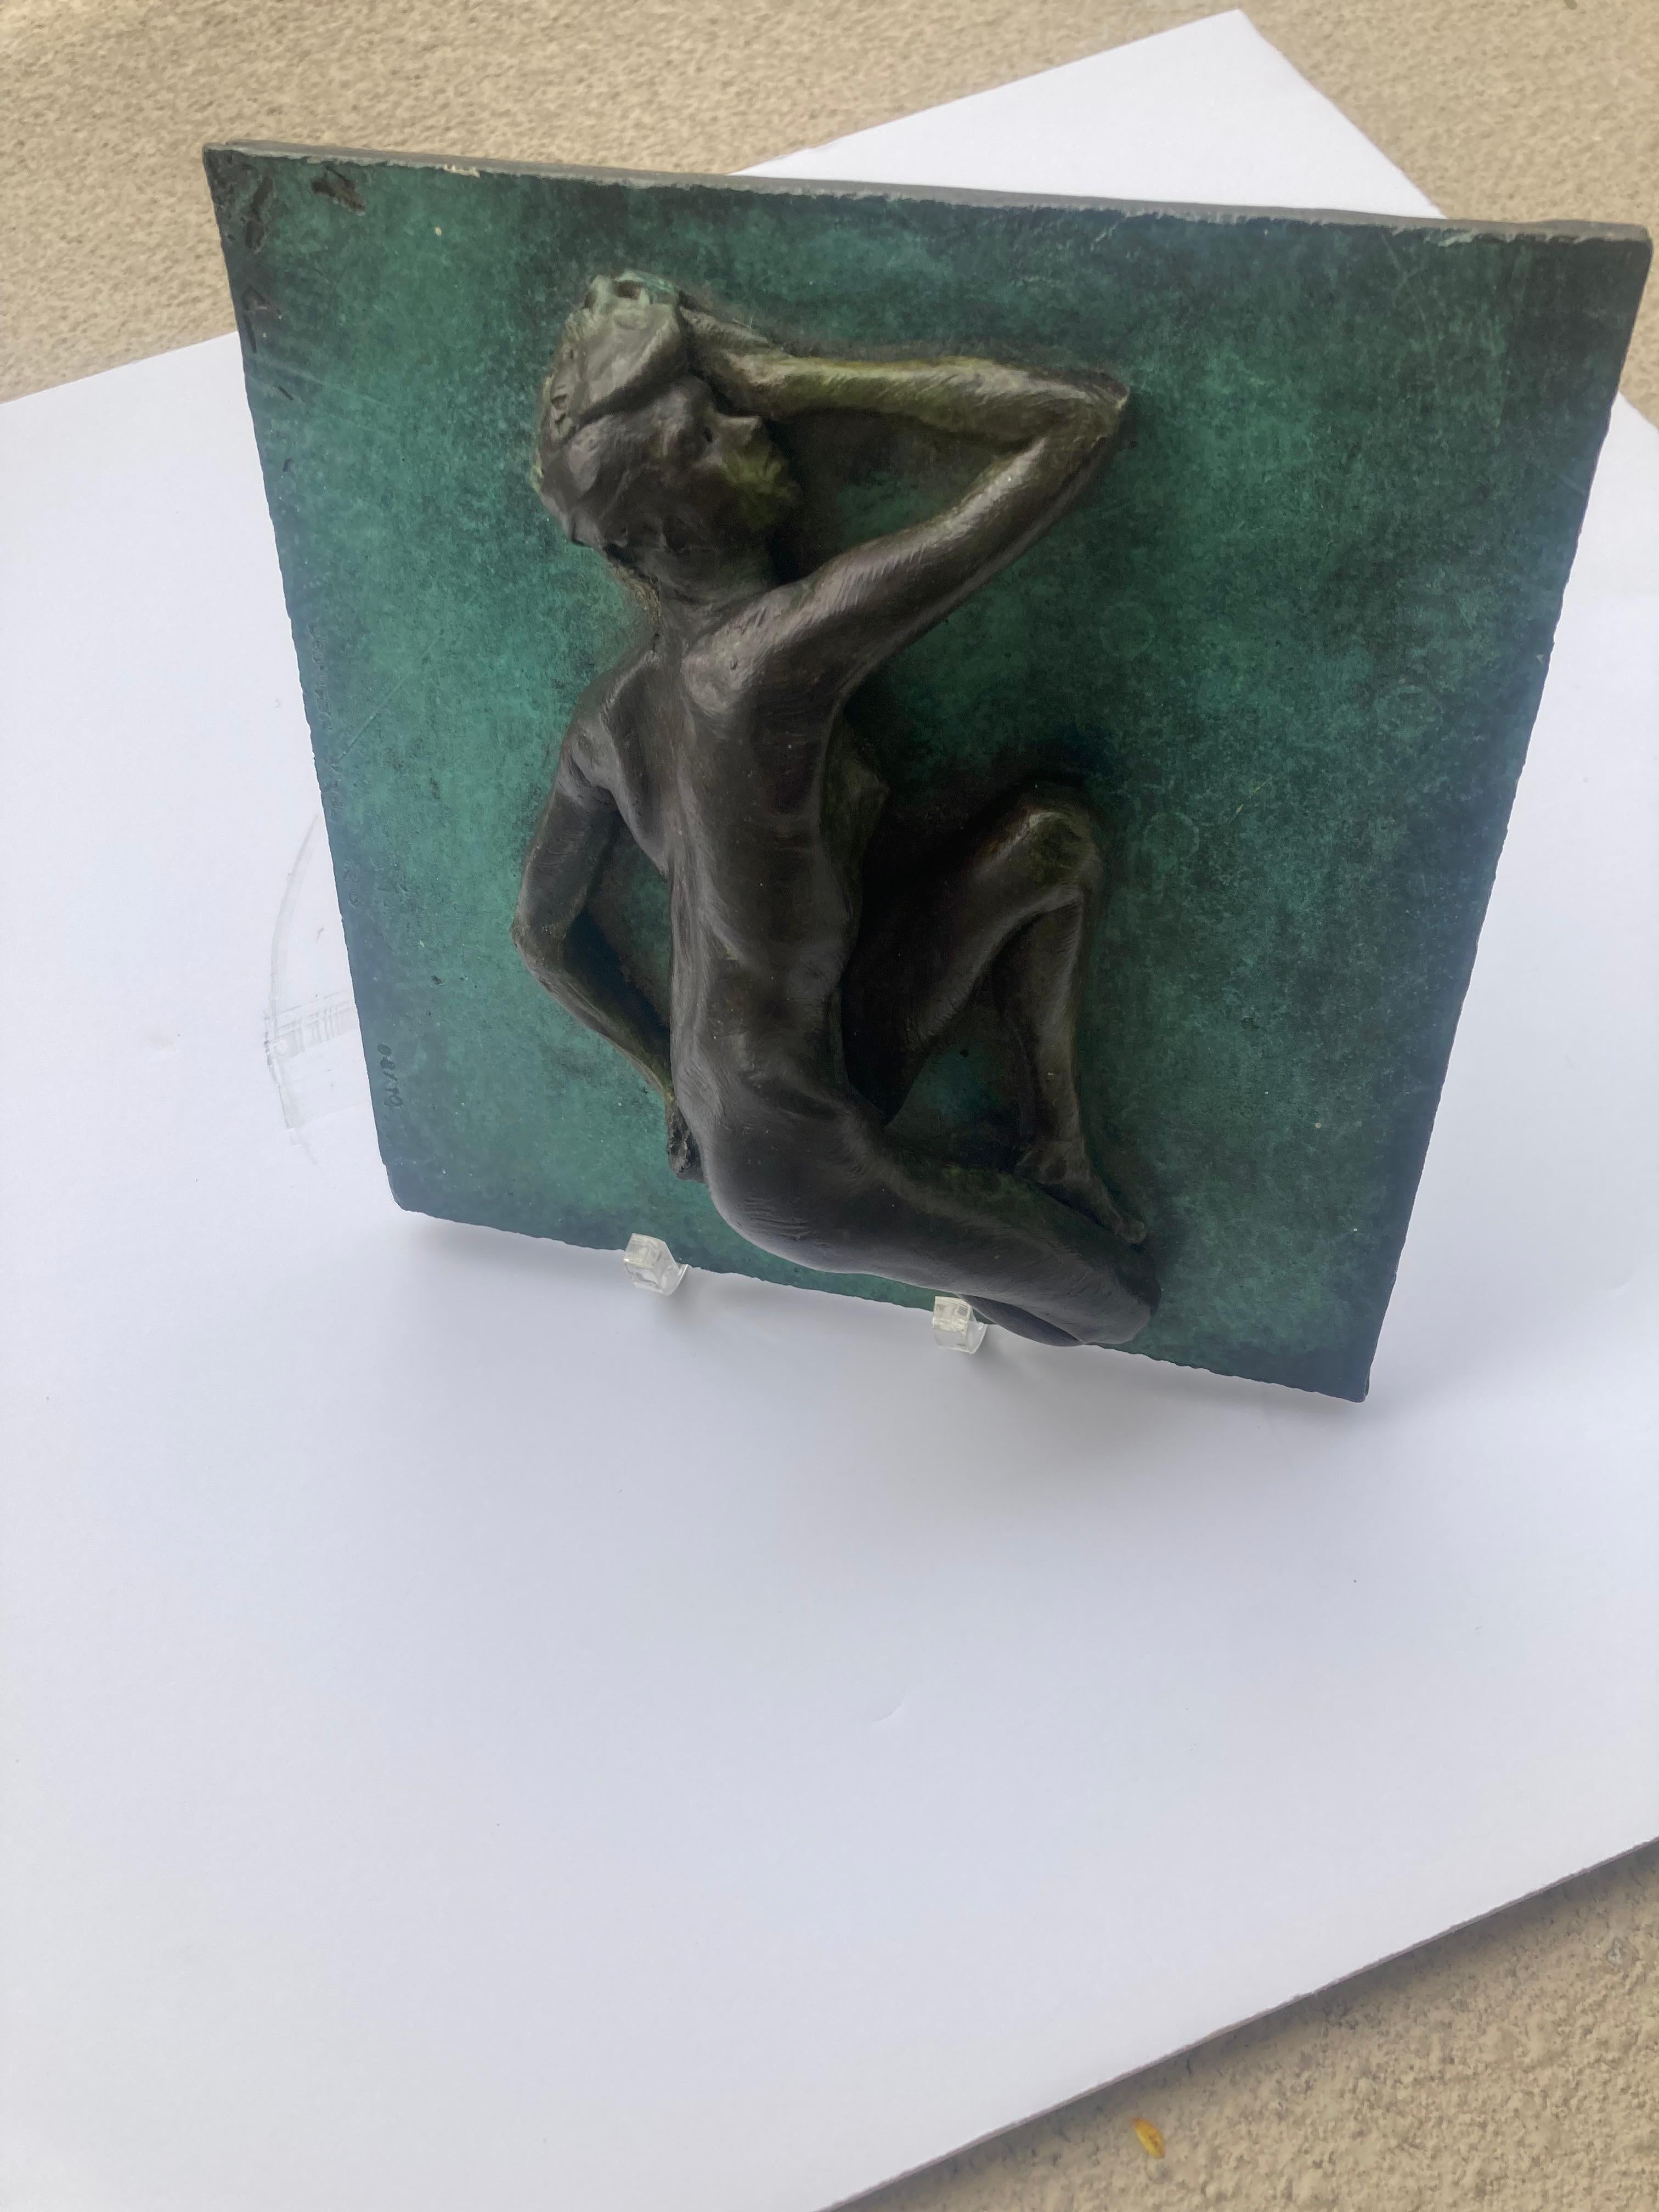 Sculpture de nu en bronze de Robert Graham, / mur/table TitreJennifer4/10,1996.RG en vente 5